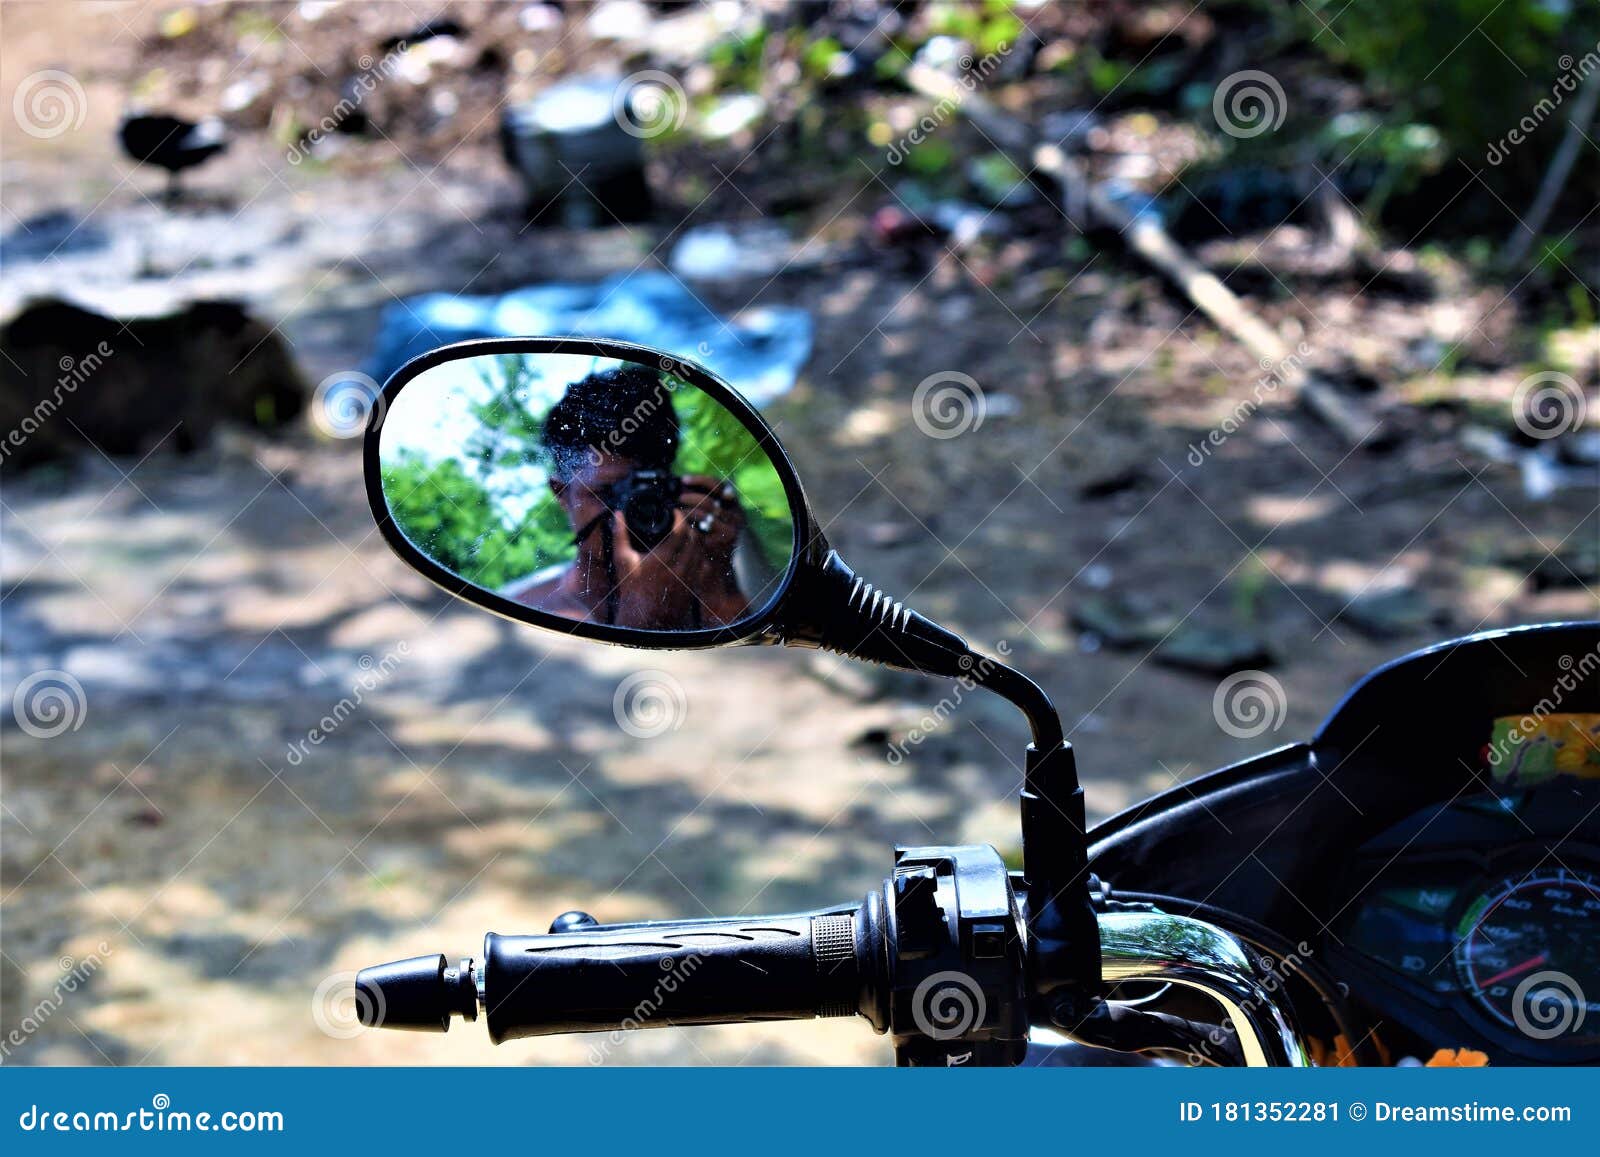 Bike Mirror Blur Background Full HD Image Stock Image - Image of vehicle,  blur: 181352281